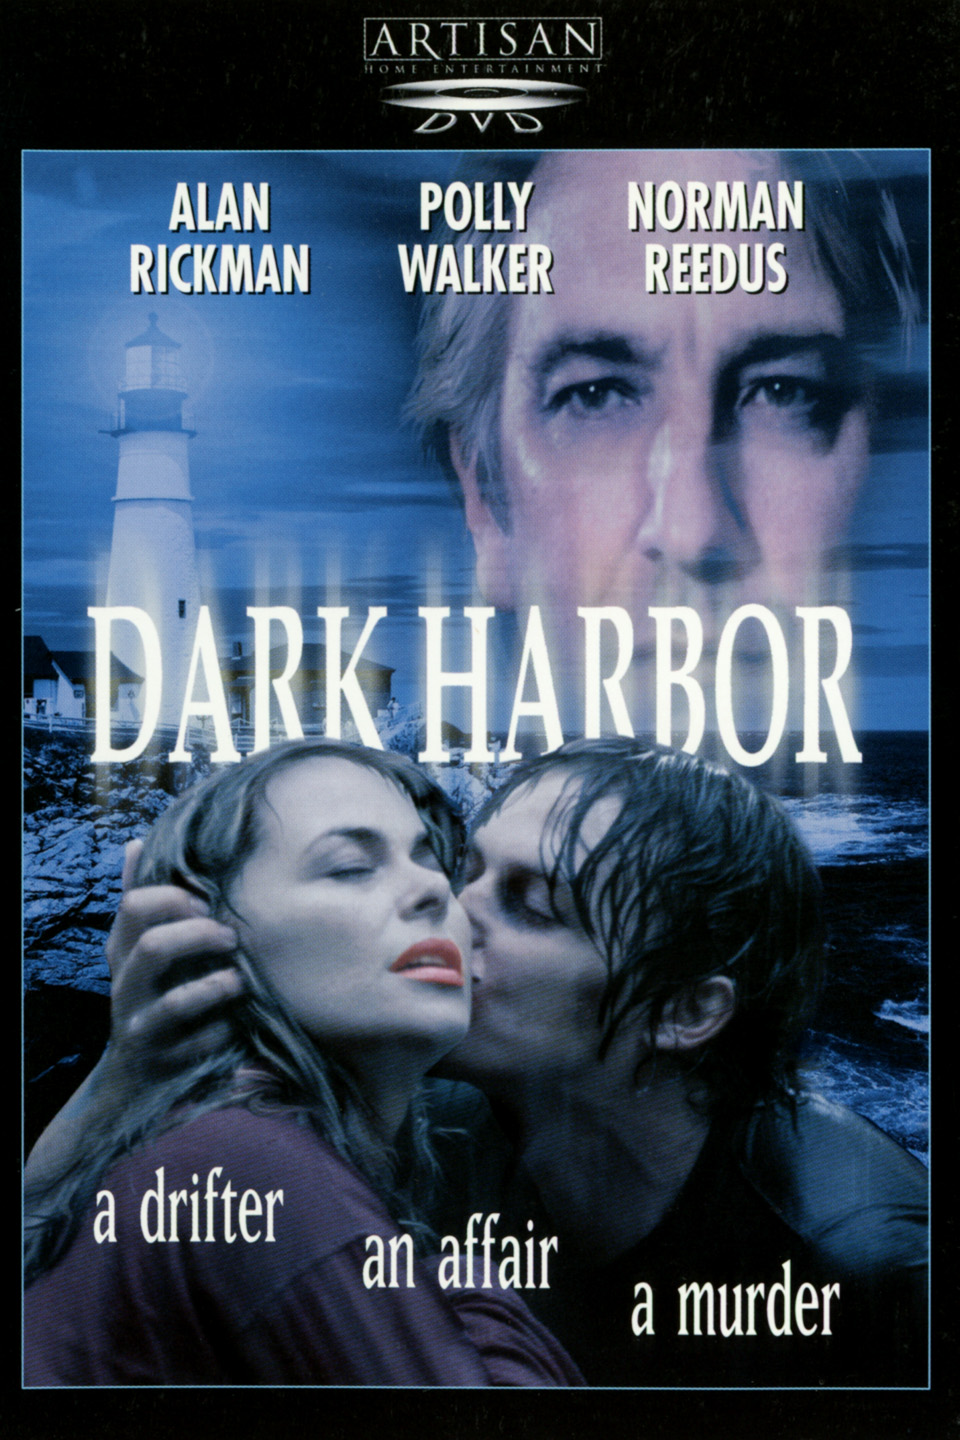 Dark Harbor (1998)